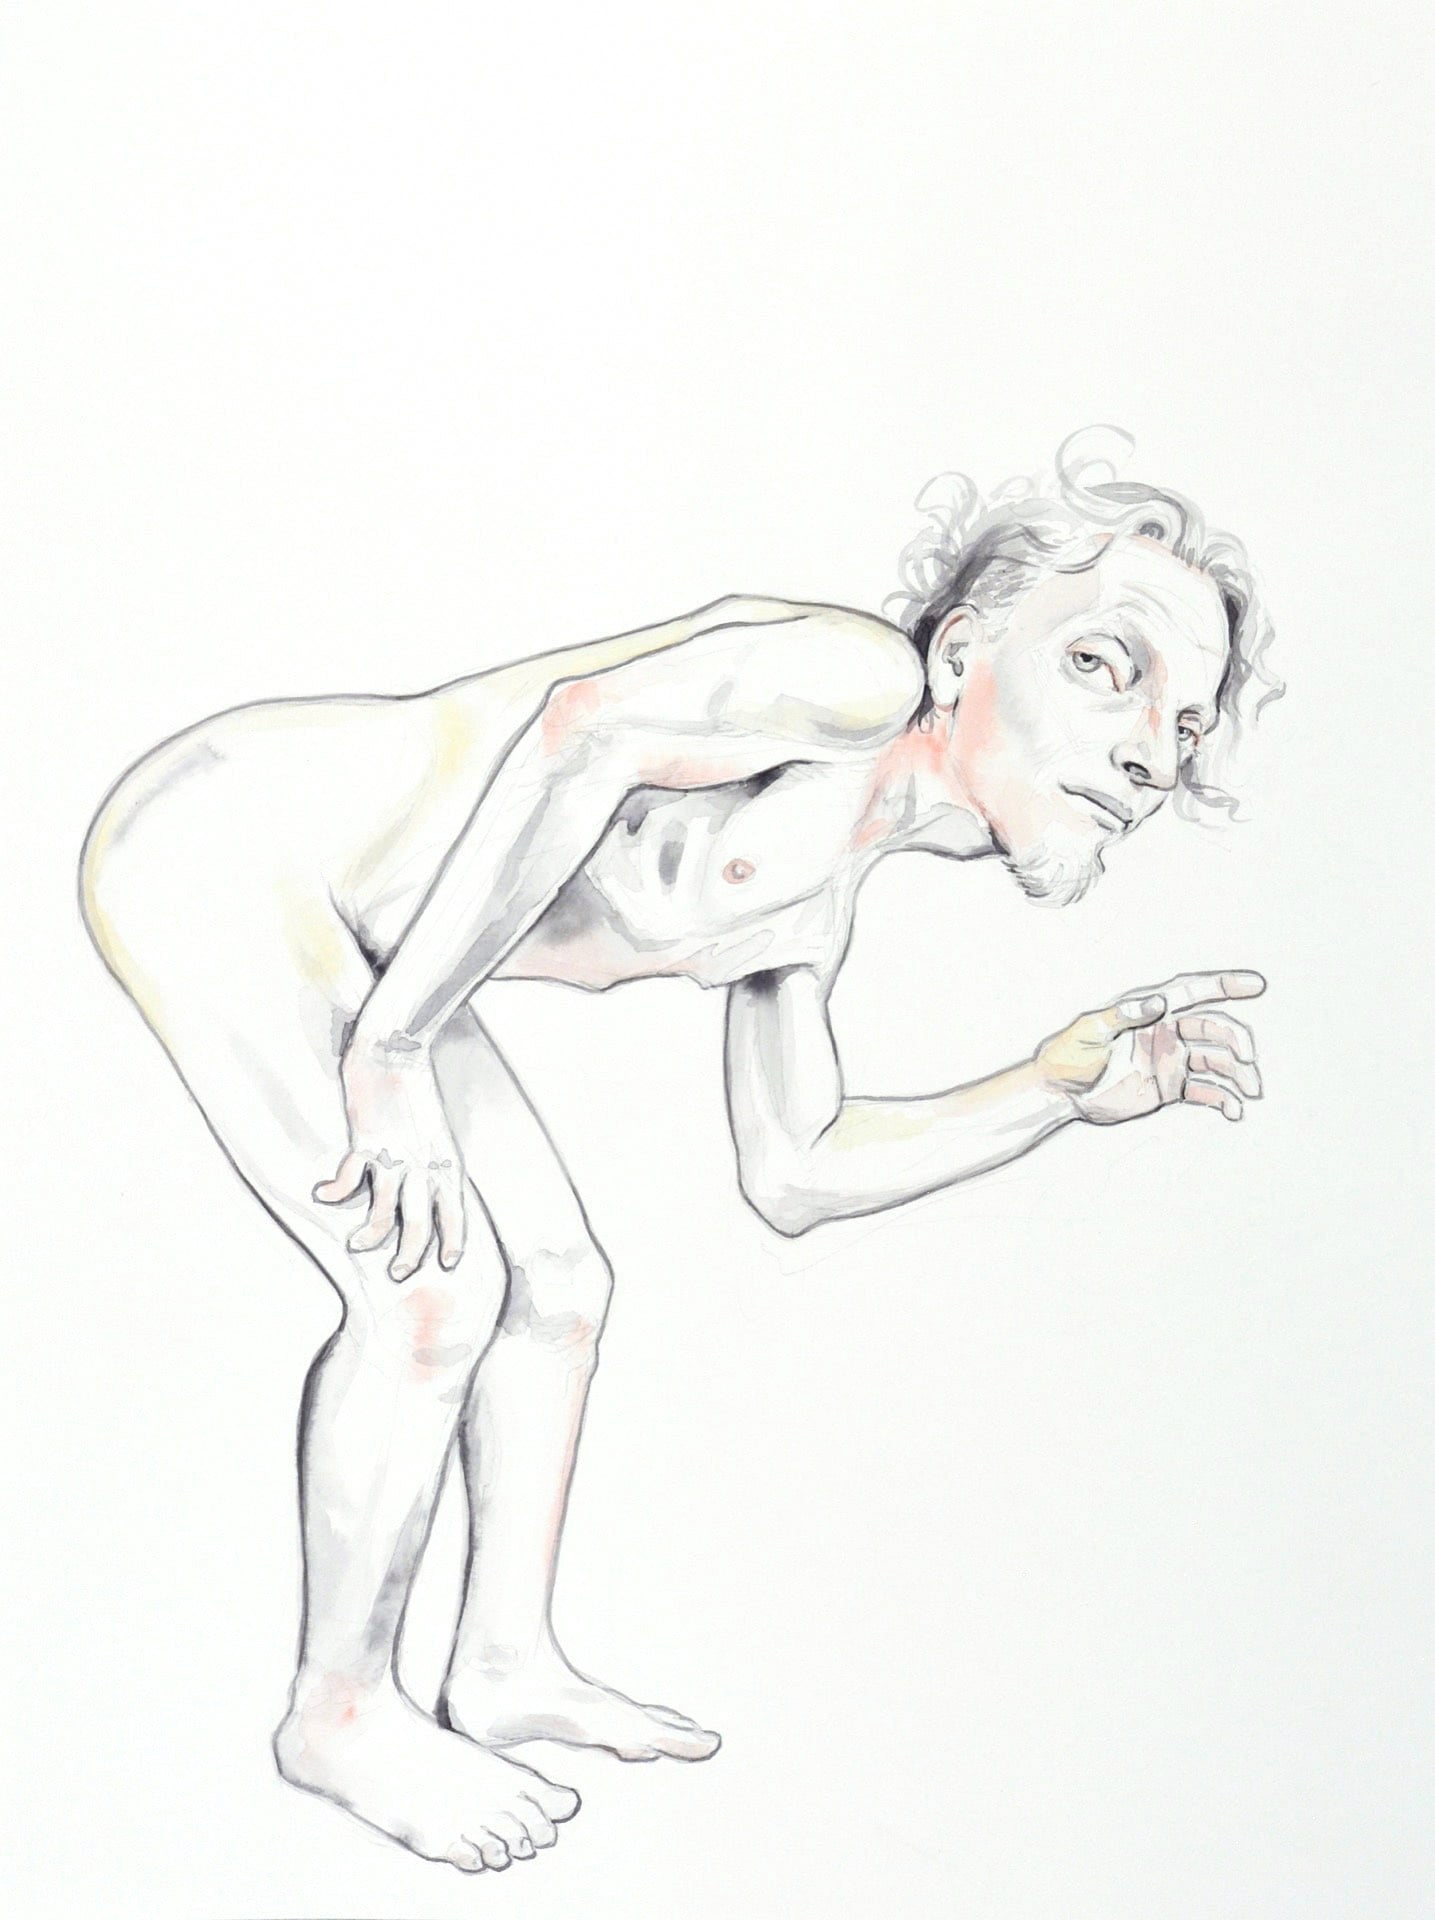  “Brian Peeking Through Keyhole”, graphite & ink on paper, 18” x 24”, 2015.